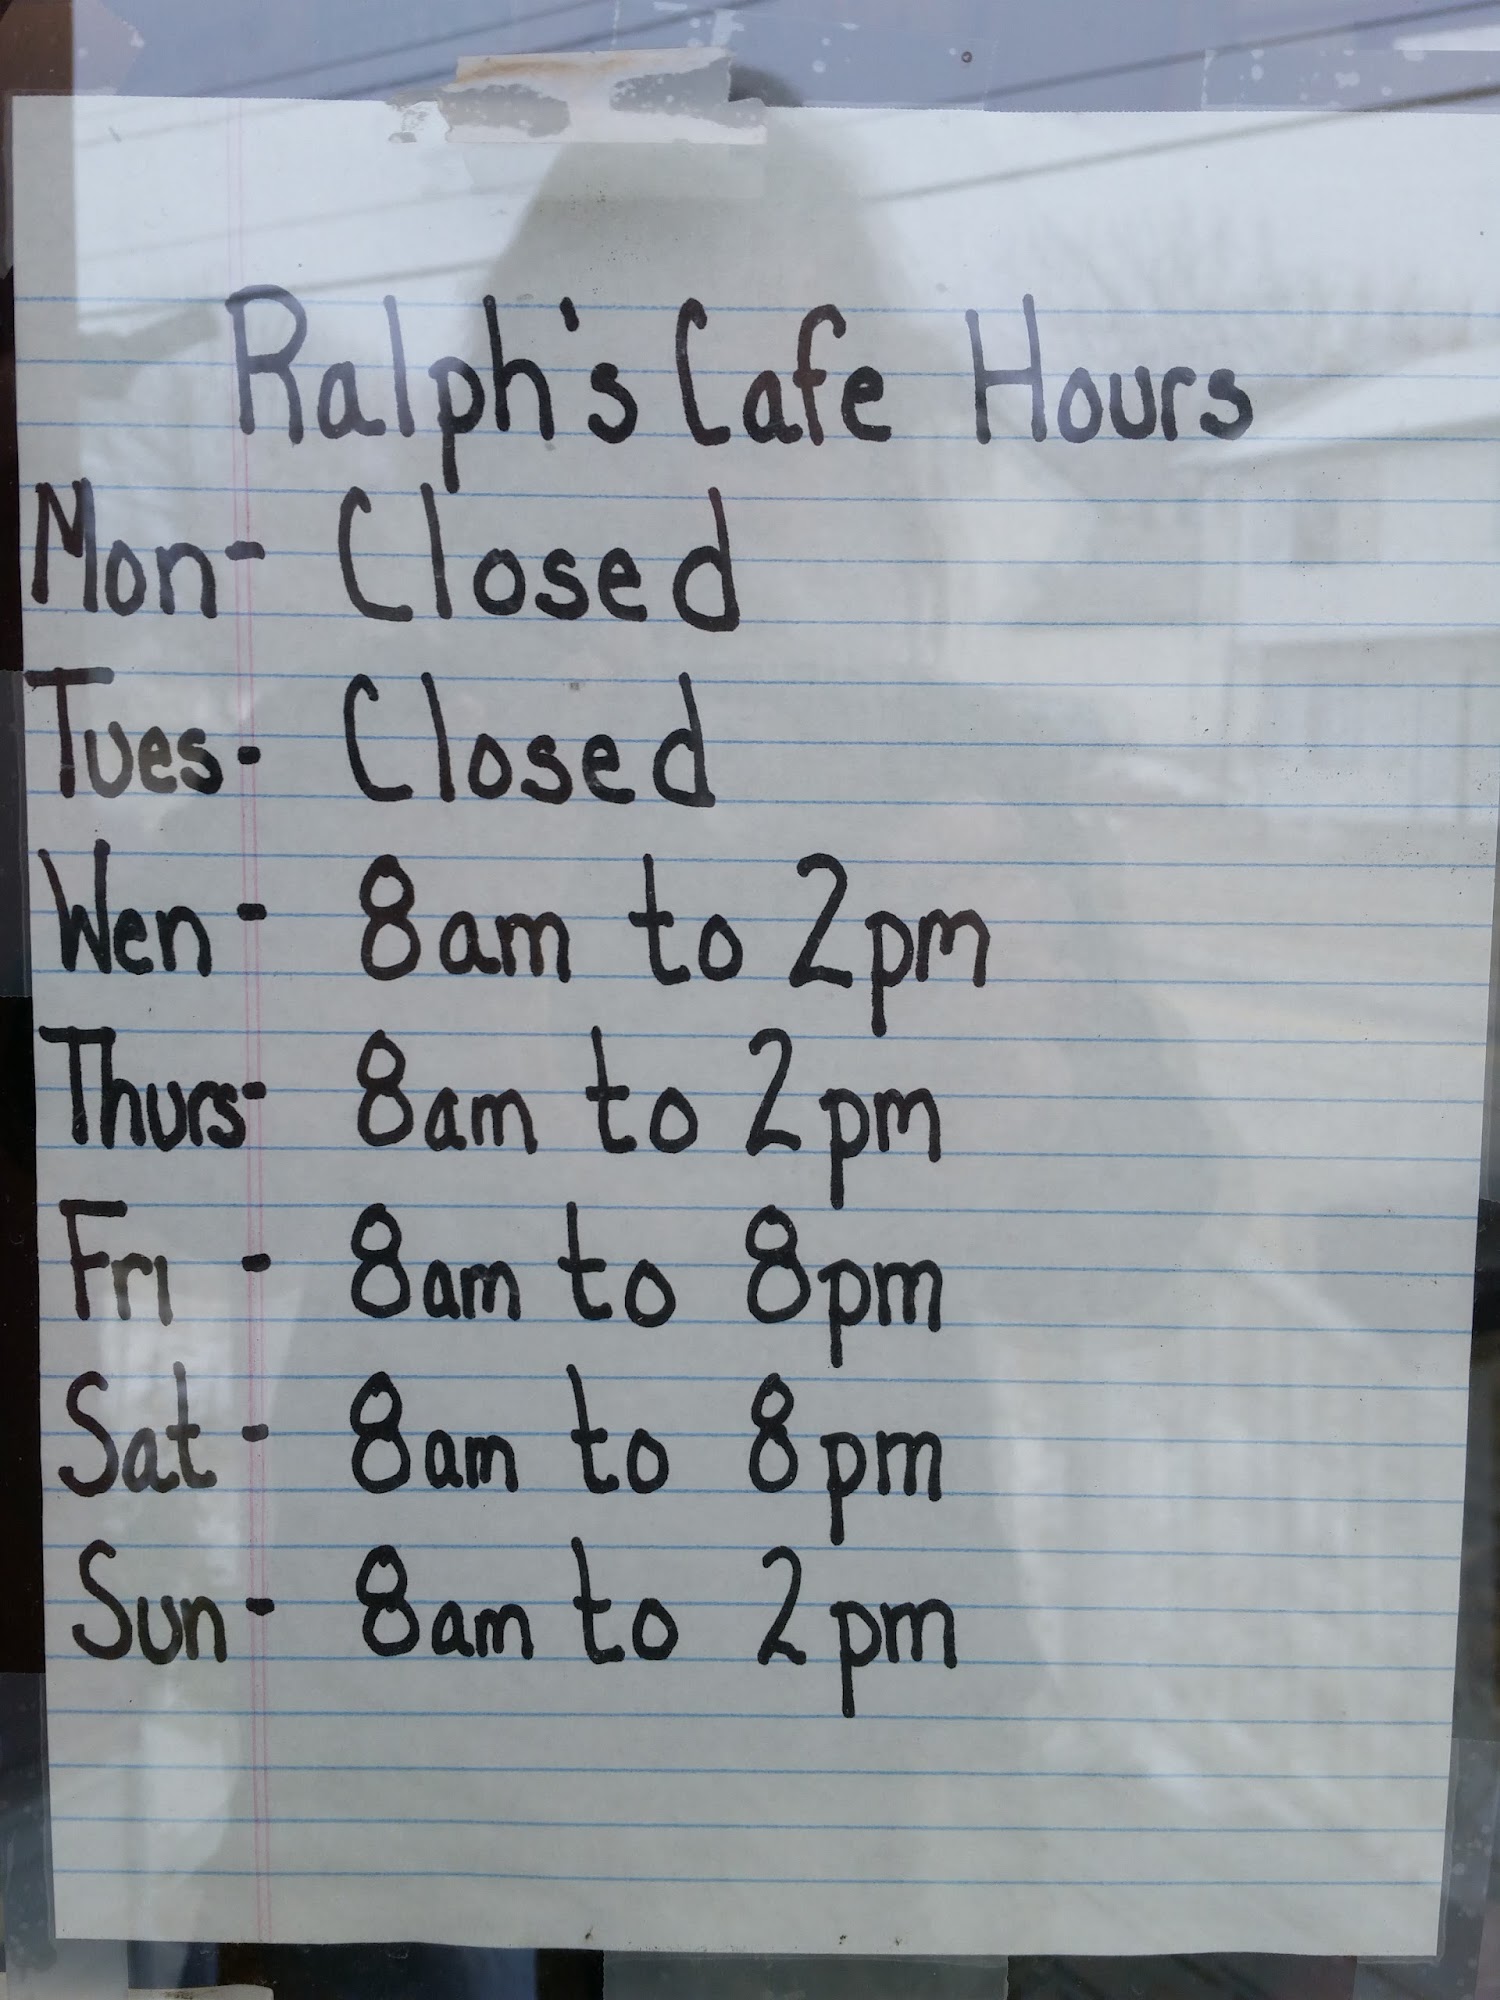 Ralph's Cafe